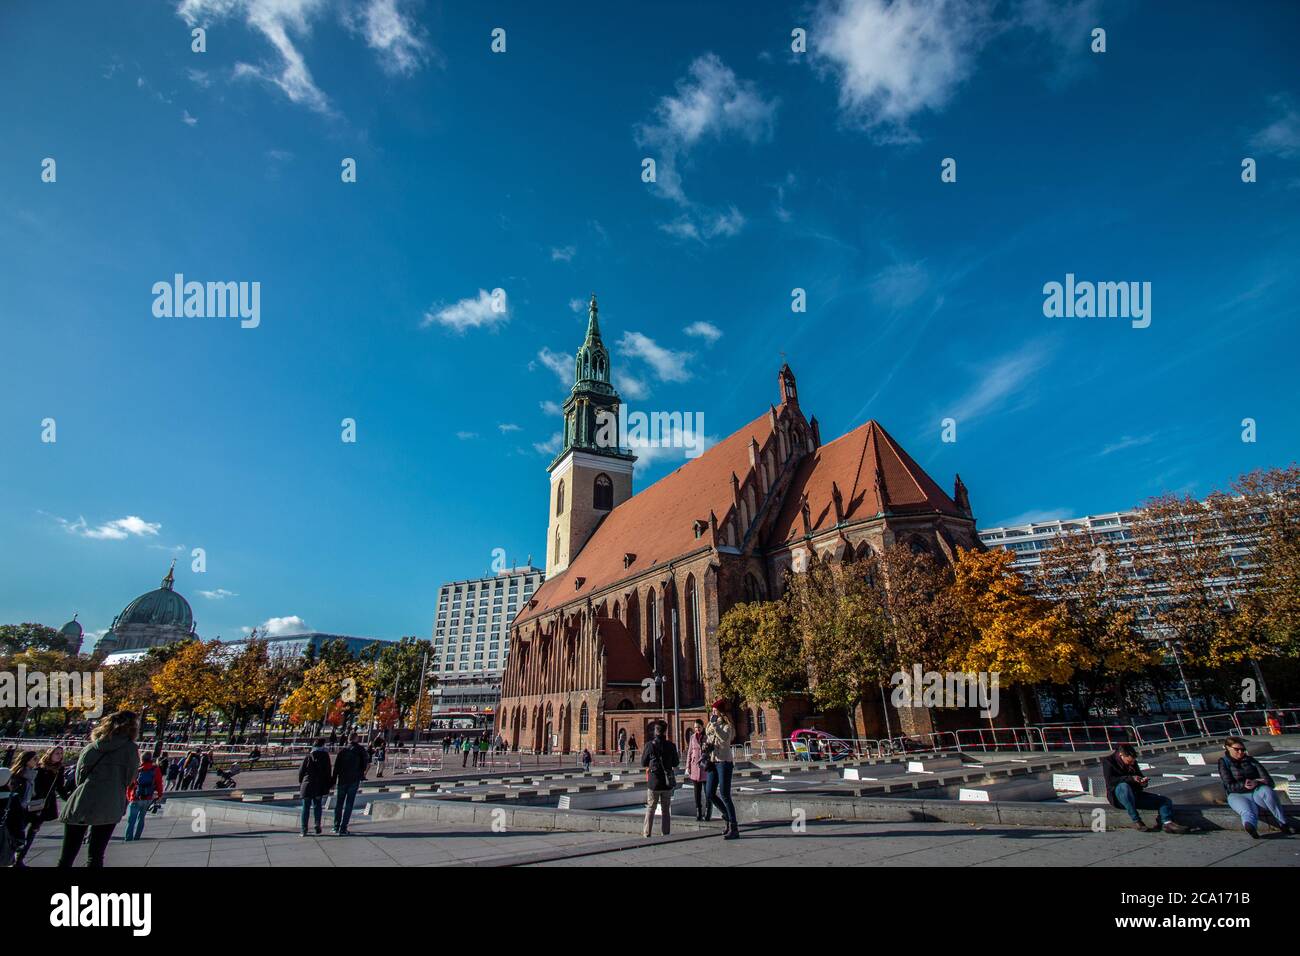 St. Mary's Church or Marienkirche in German near Alexanderplatz in central Berlin, Germany. Stock Photo